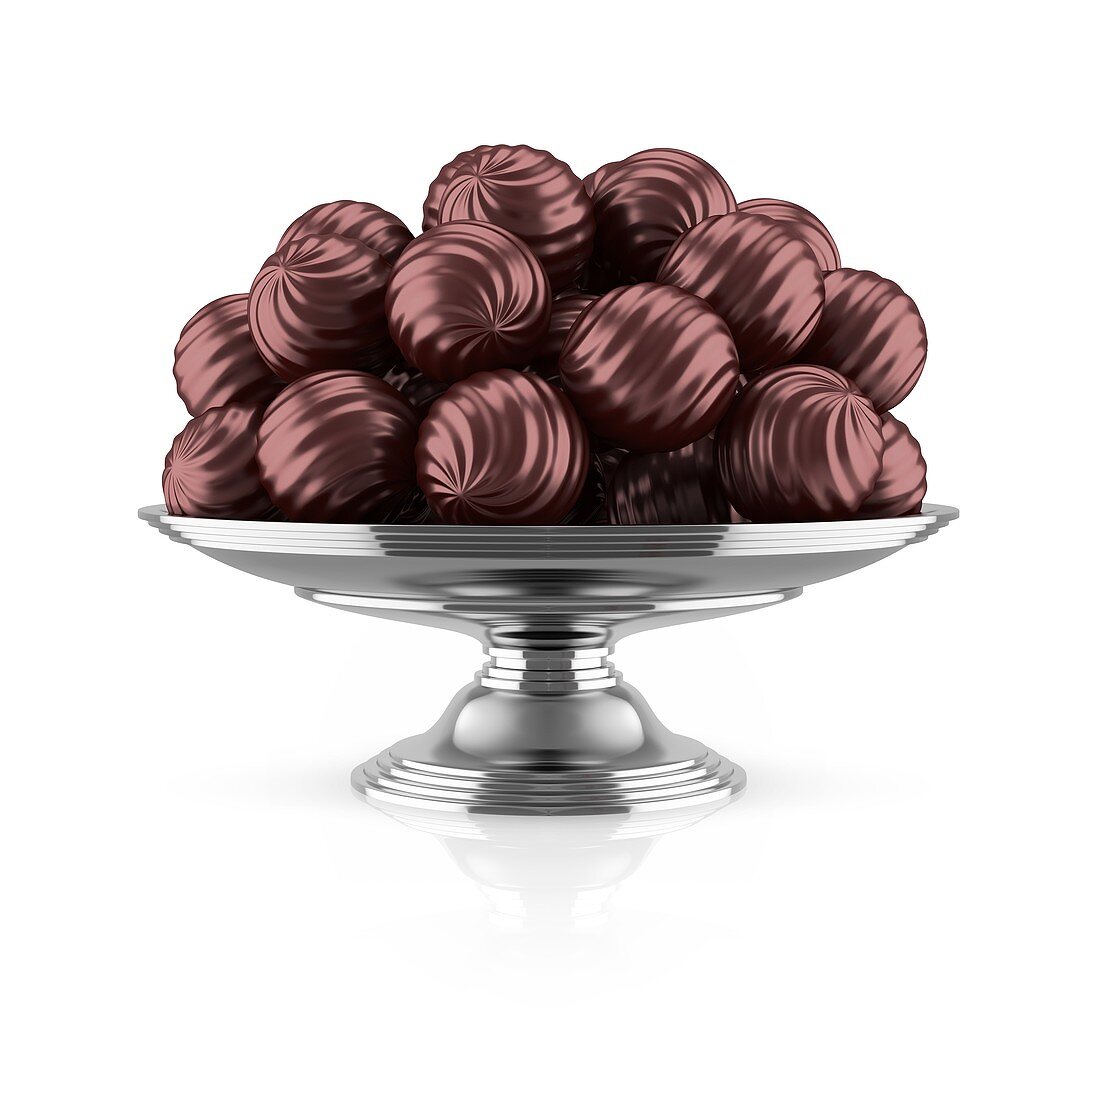 Dark chocolates on silver tray, illustration